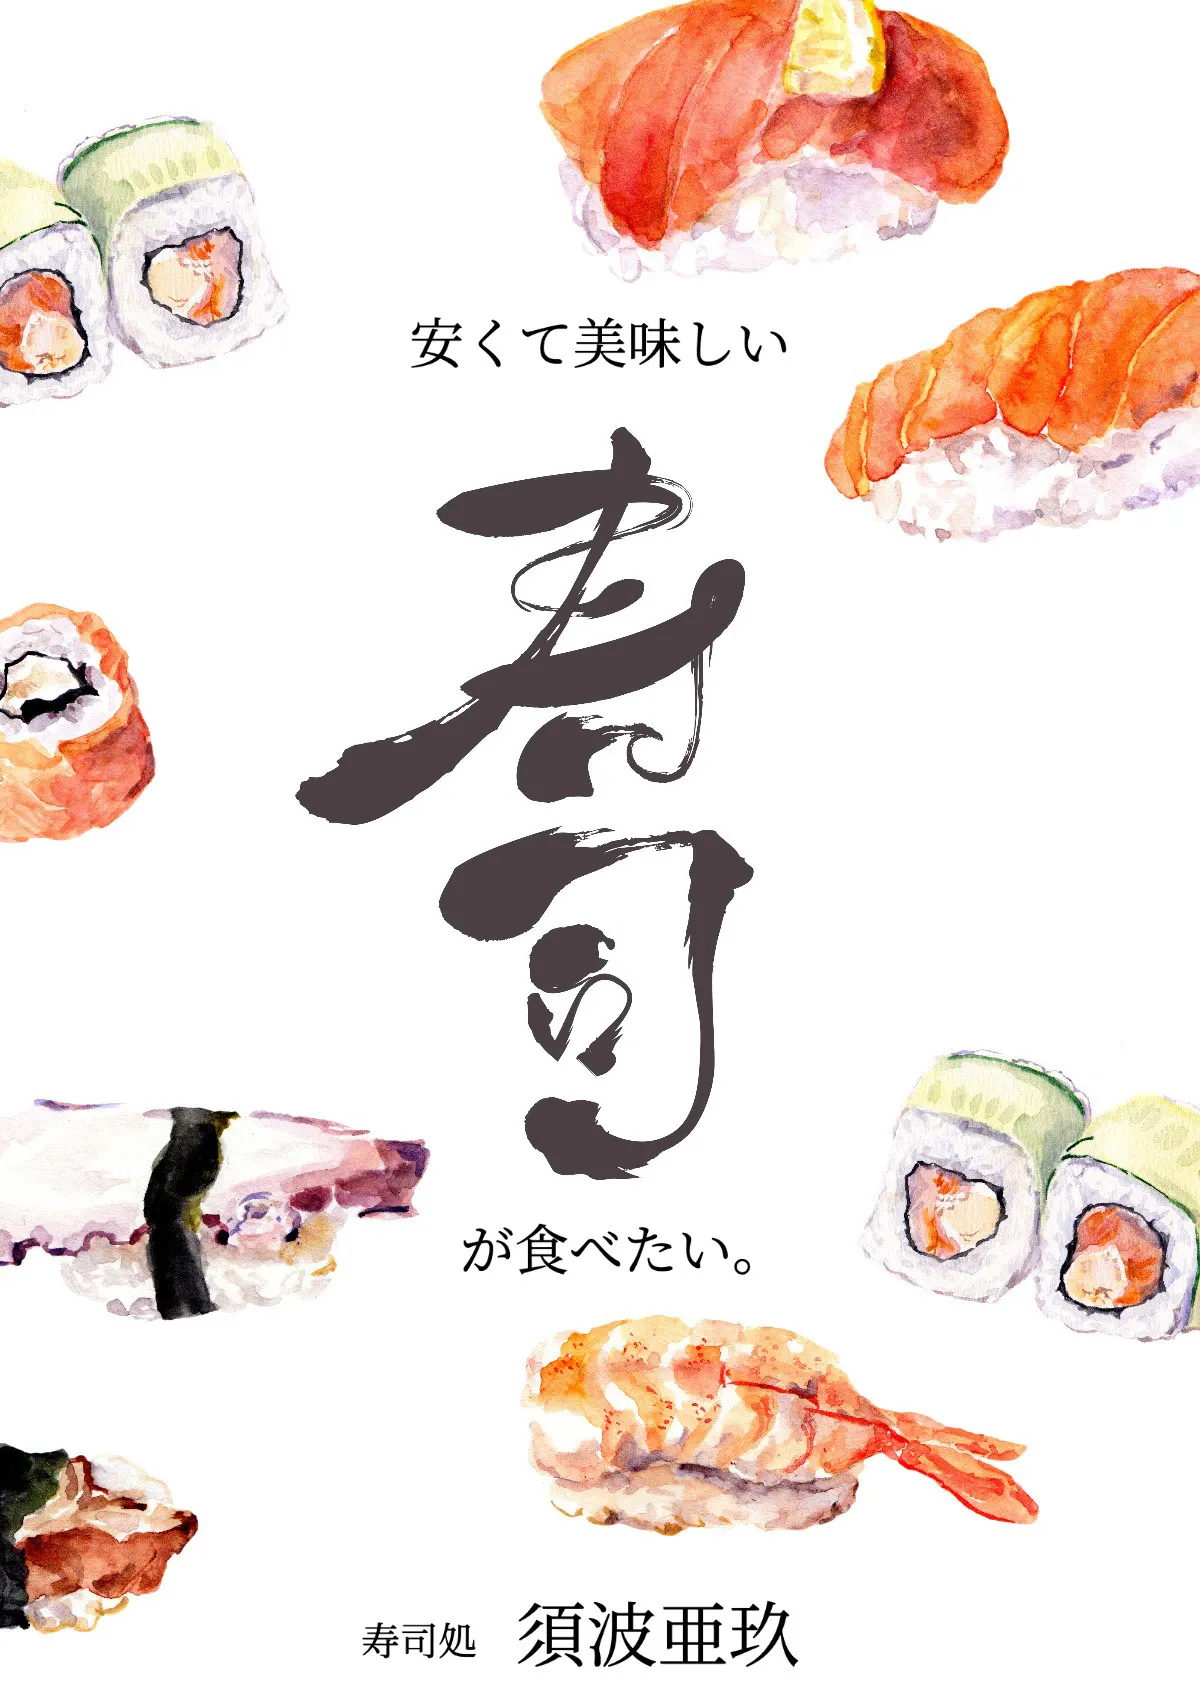 sushi promotion poster